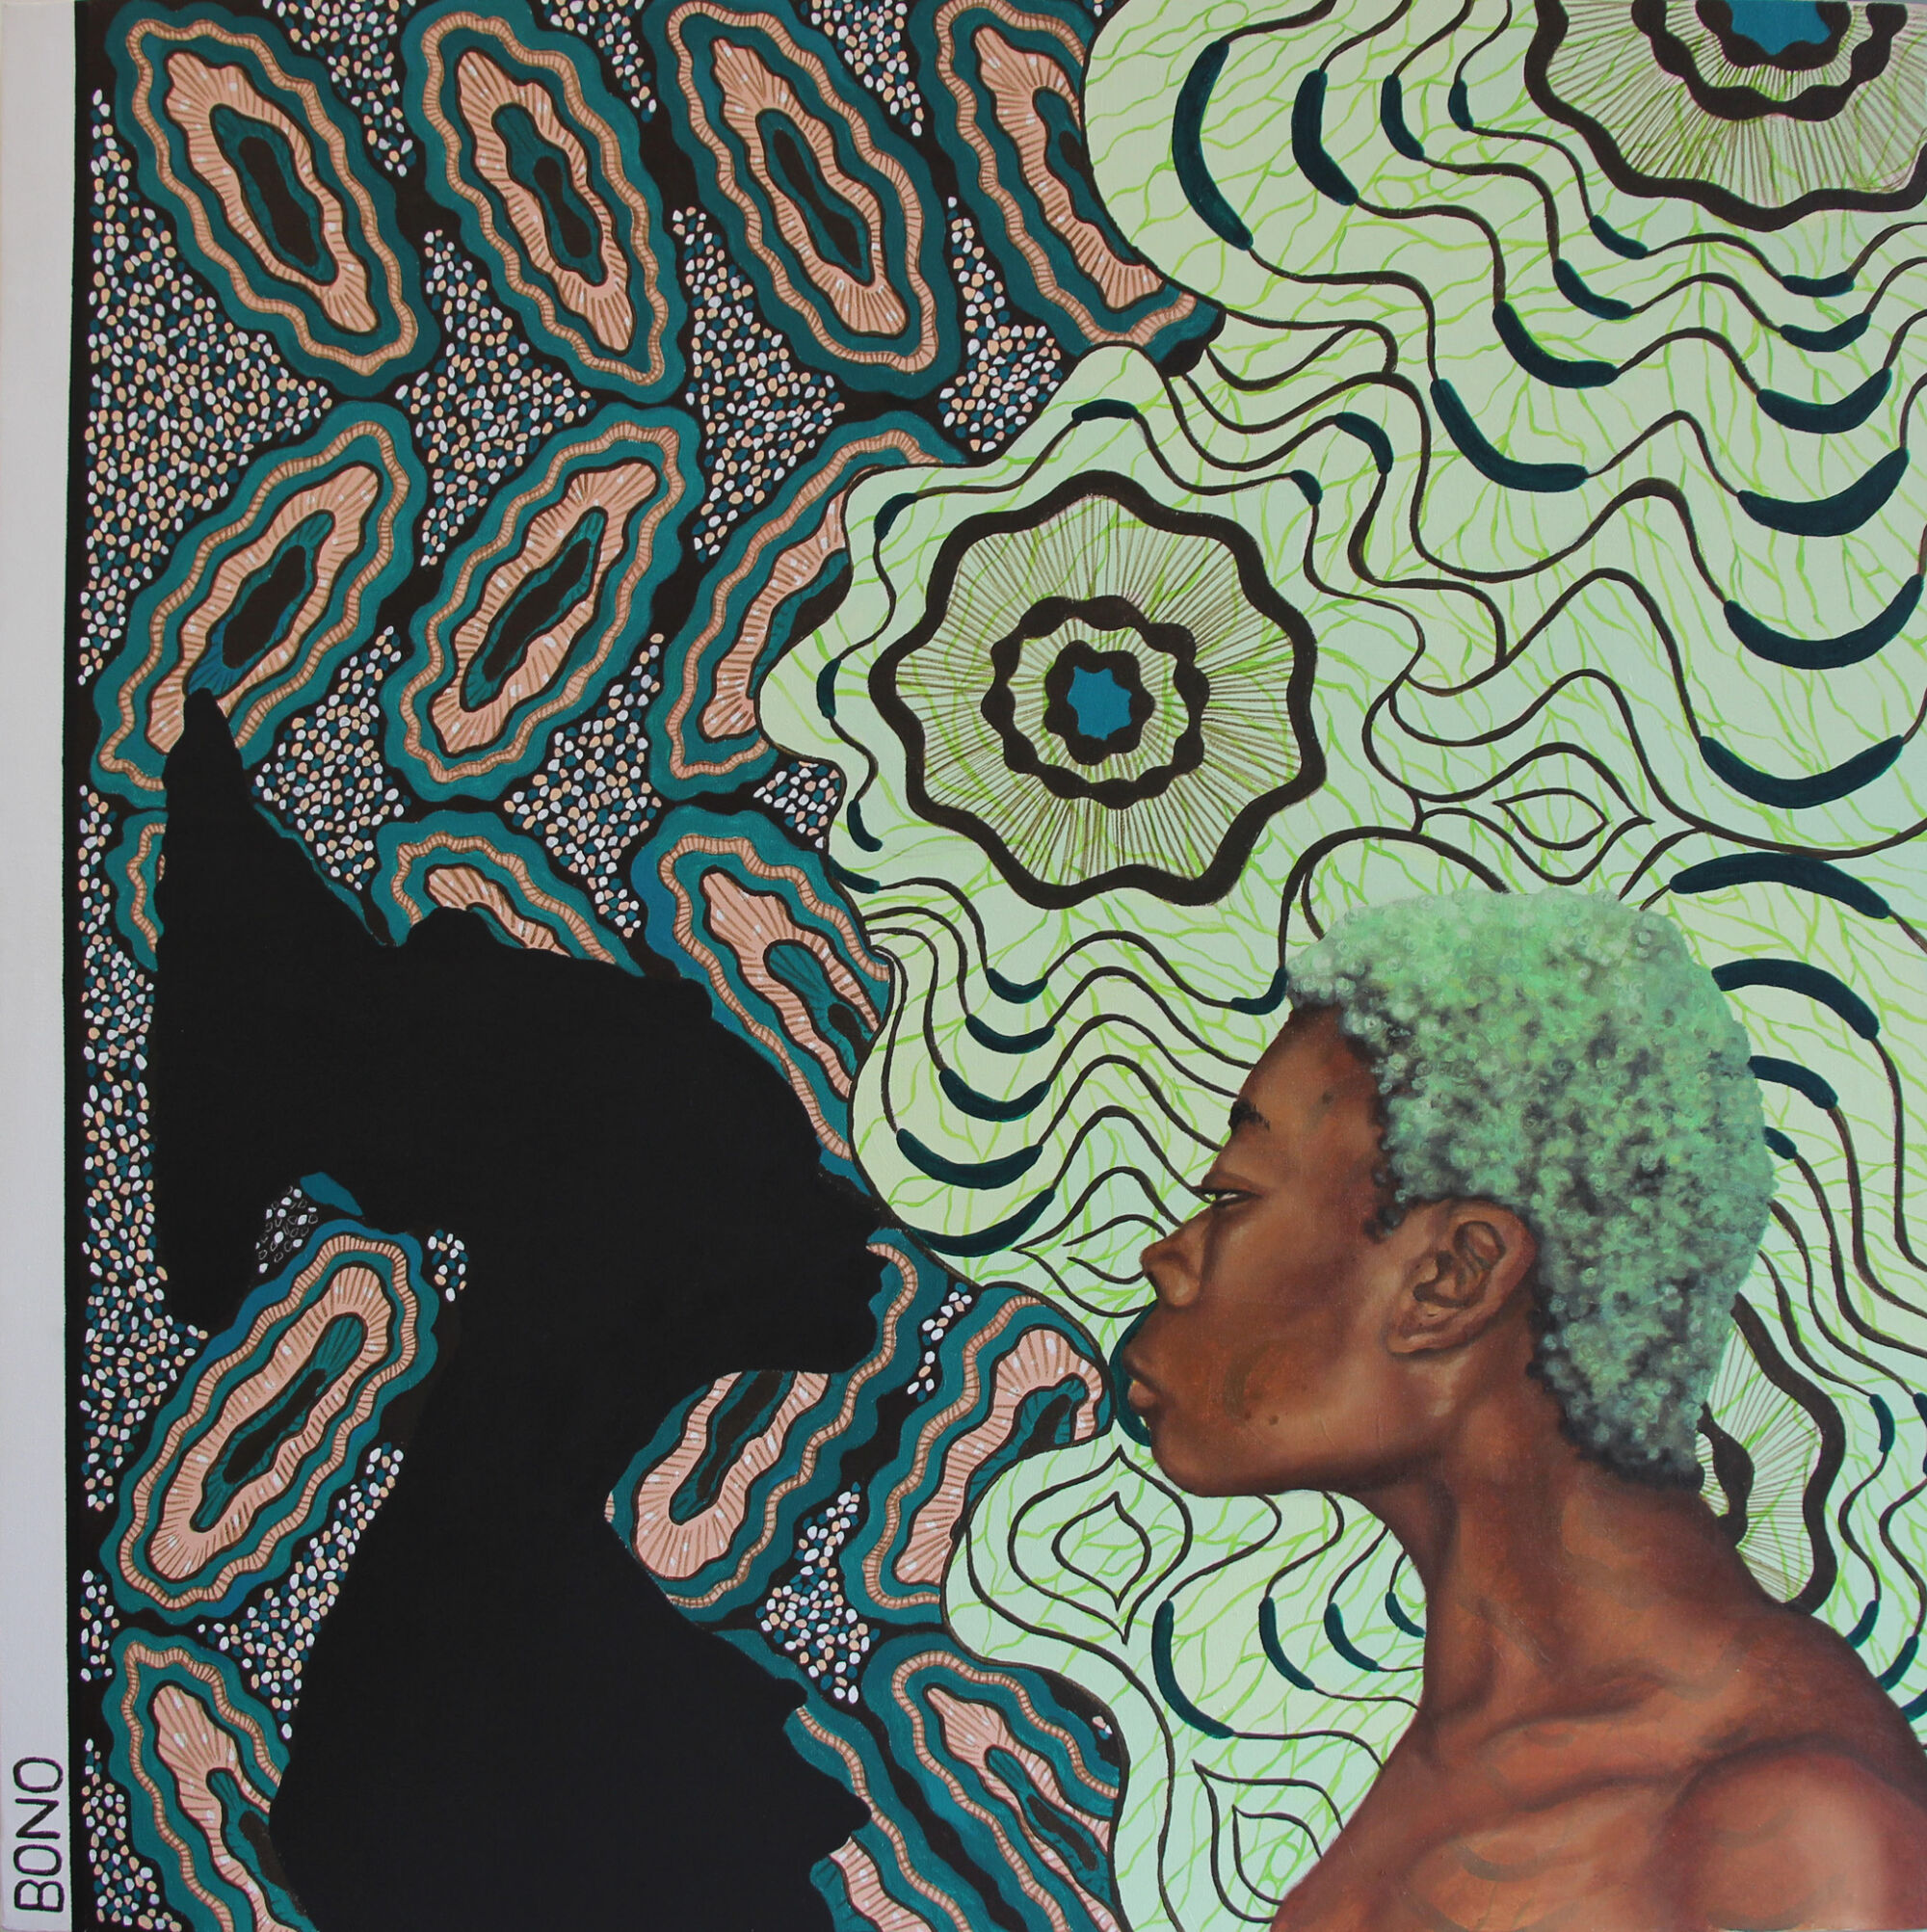 The Wick - Untitled (Mangbetu), 2019
95 x 95 cm by Shannon Bono, courtesy of the artist